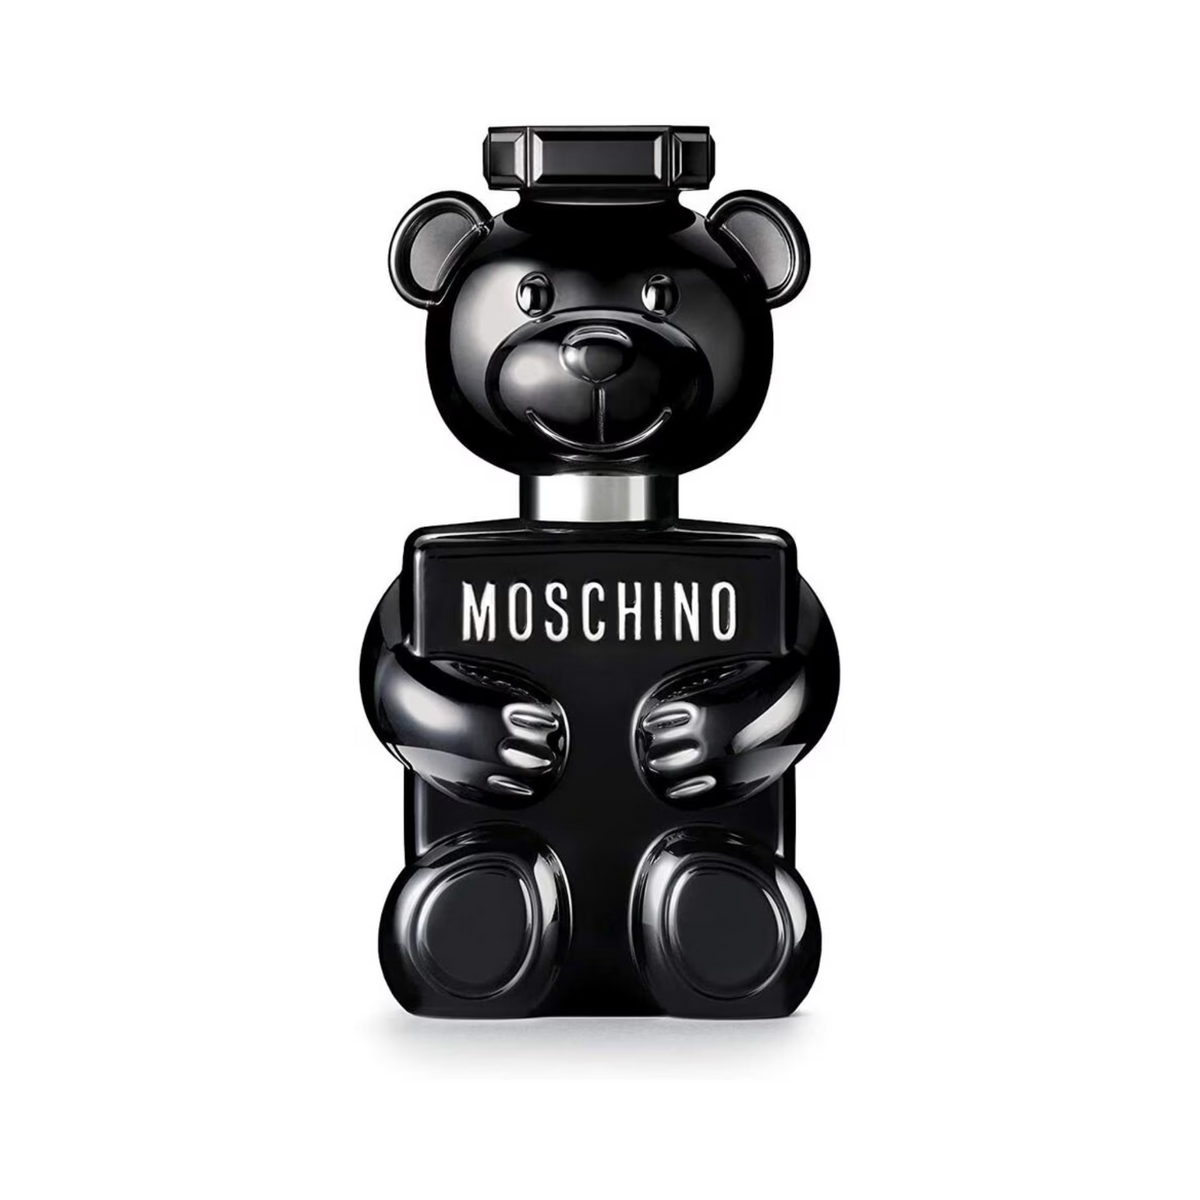 Moschino Toy Boy For Men Eau De Parfum